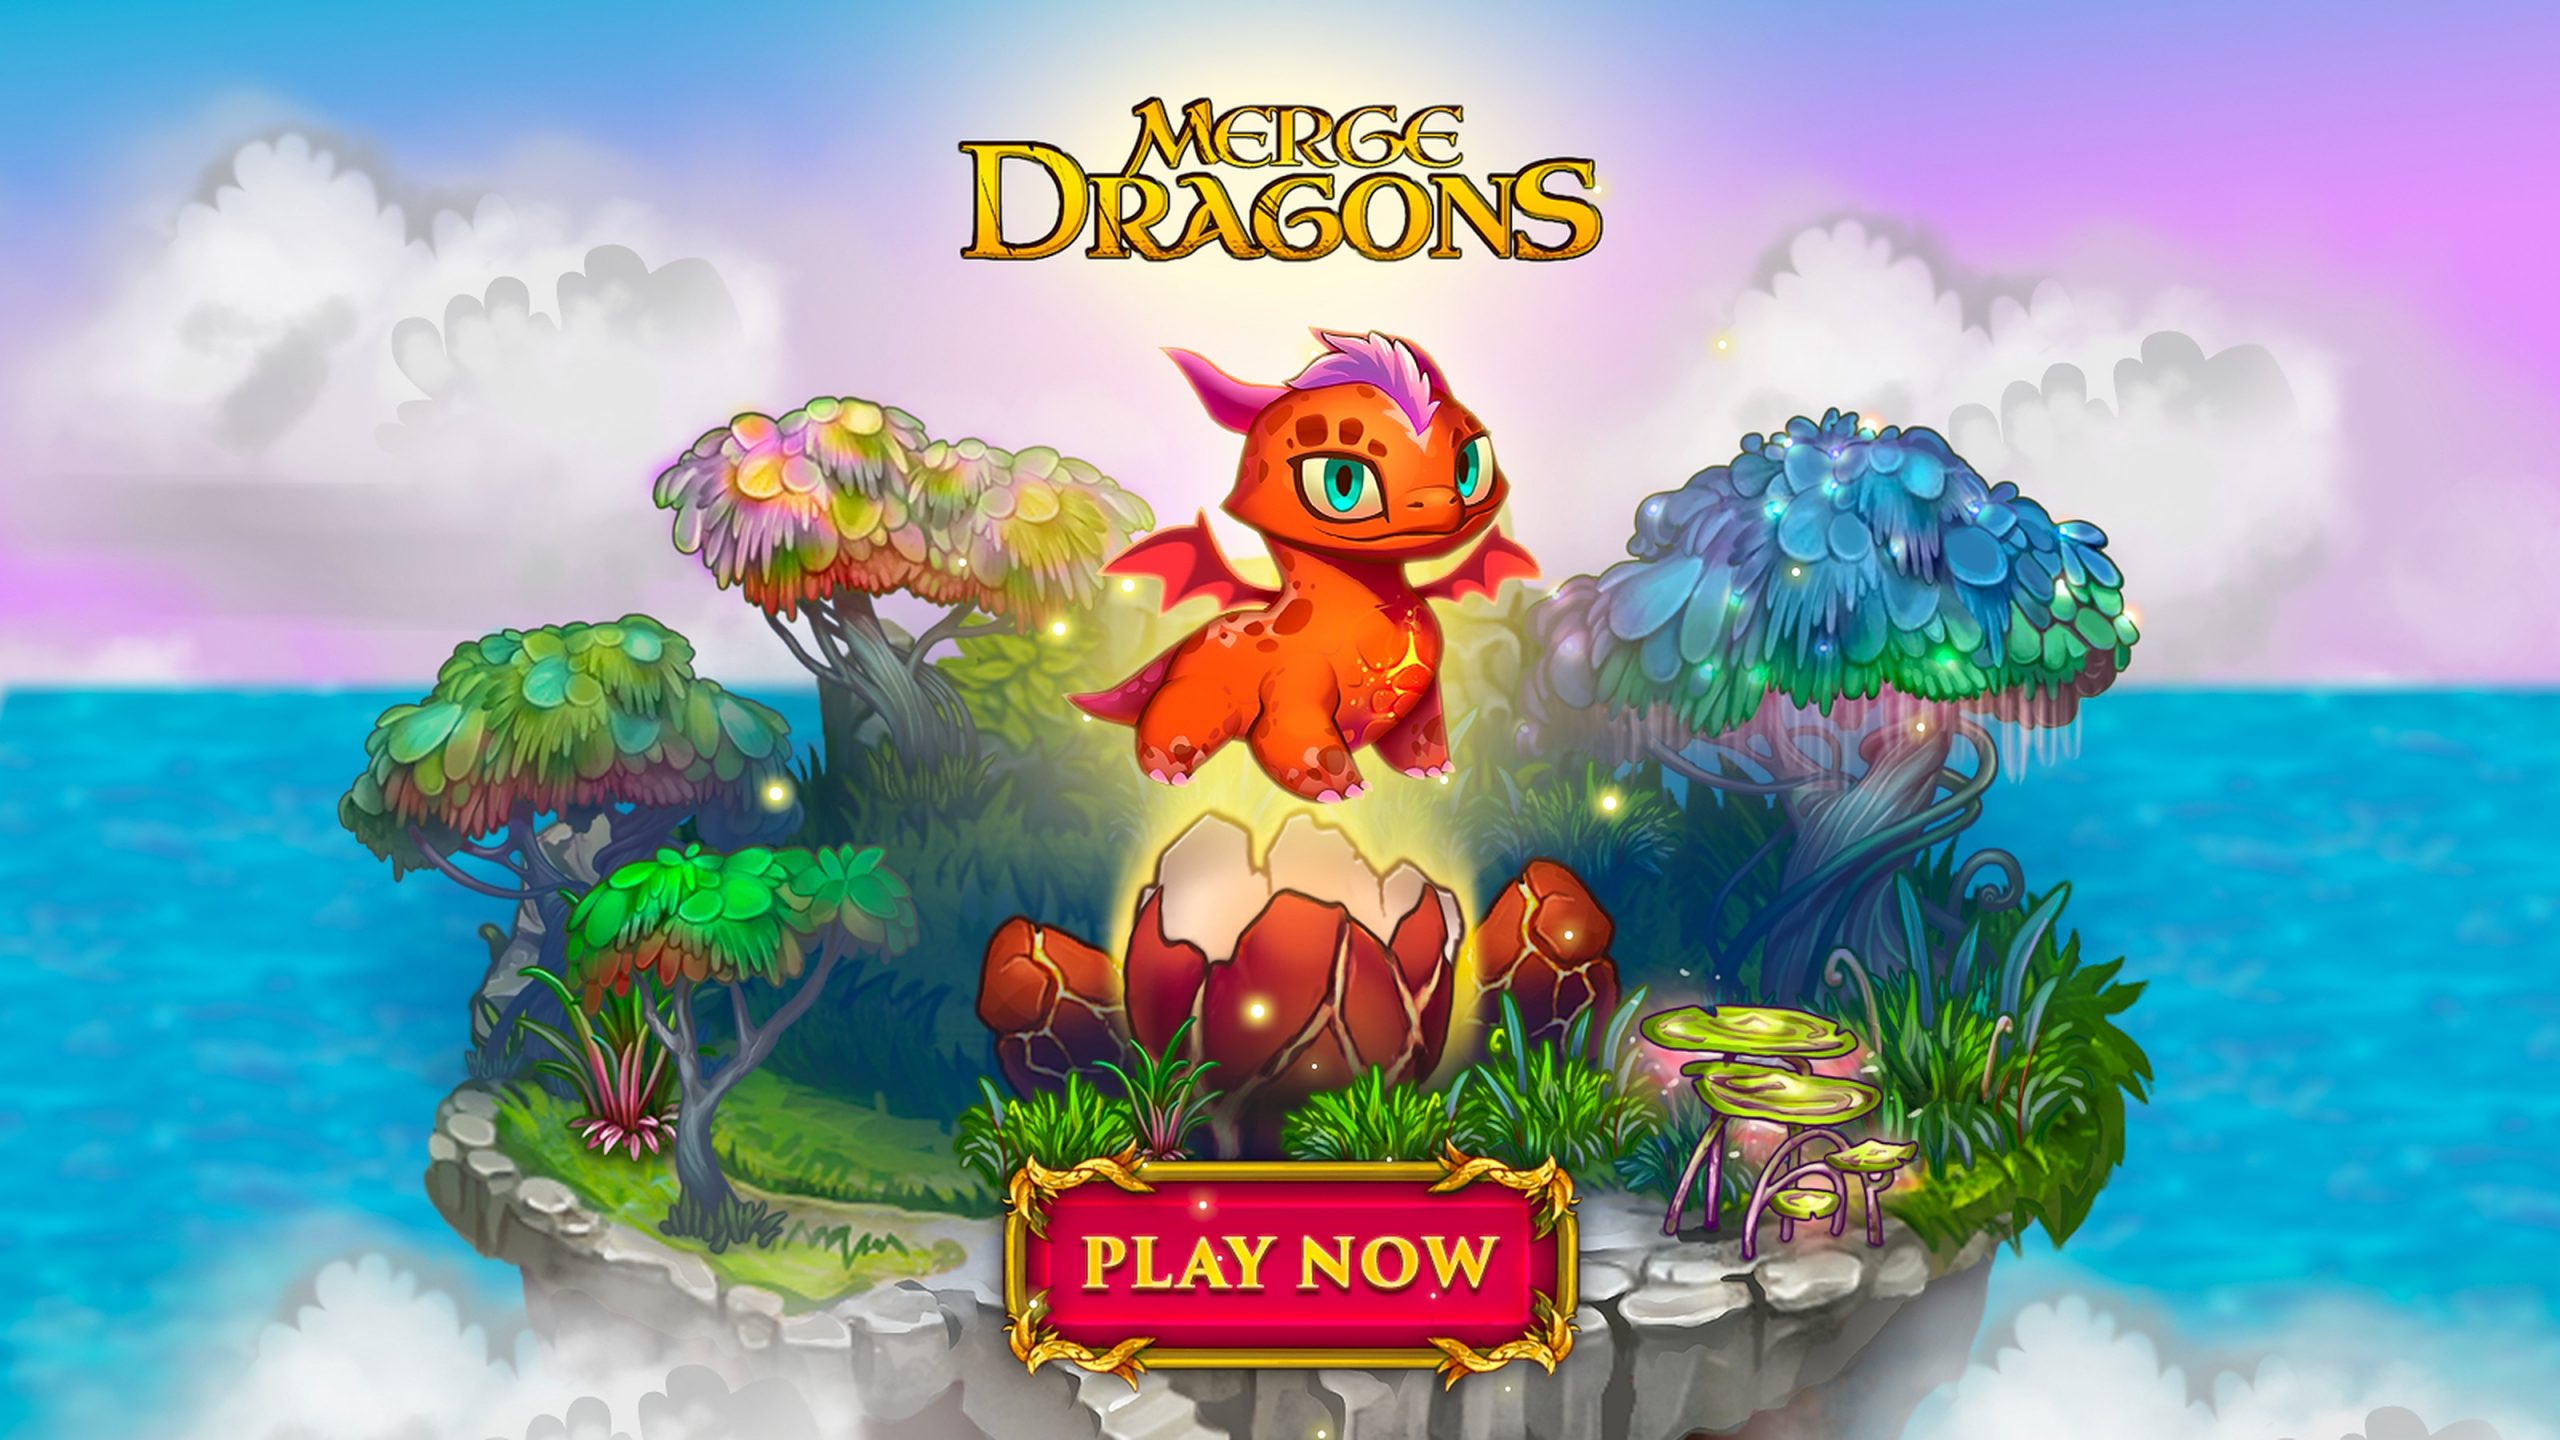 Merge Dragons: The Dragons